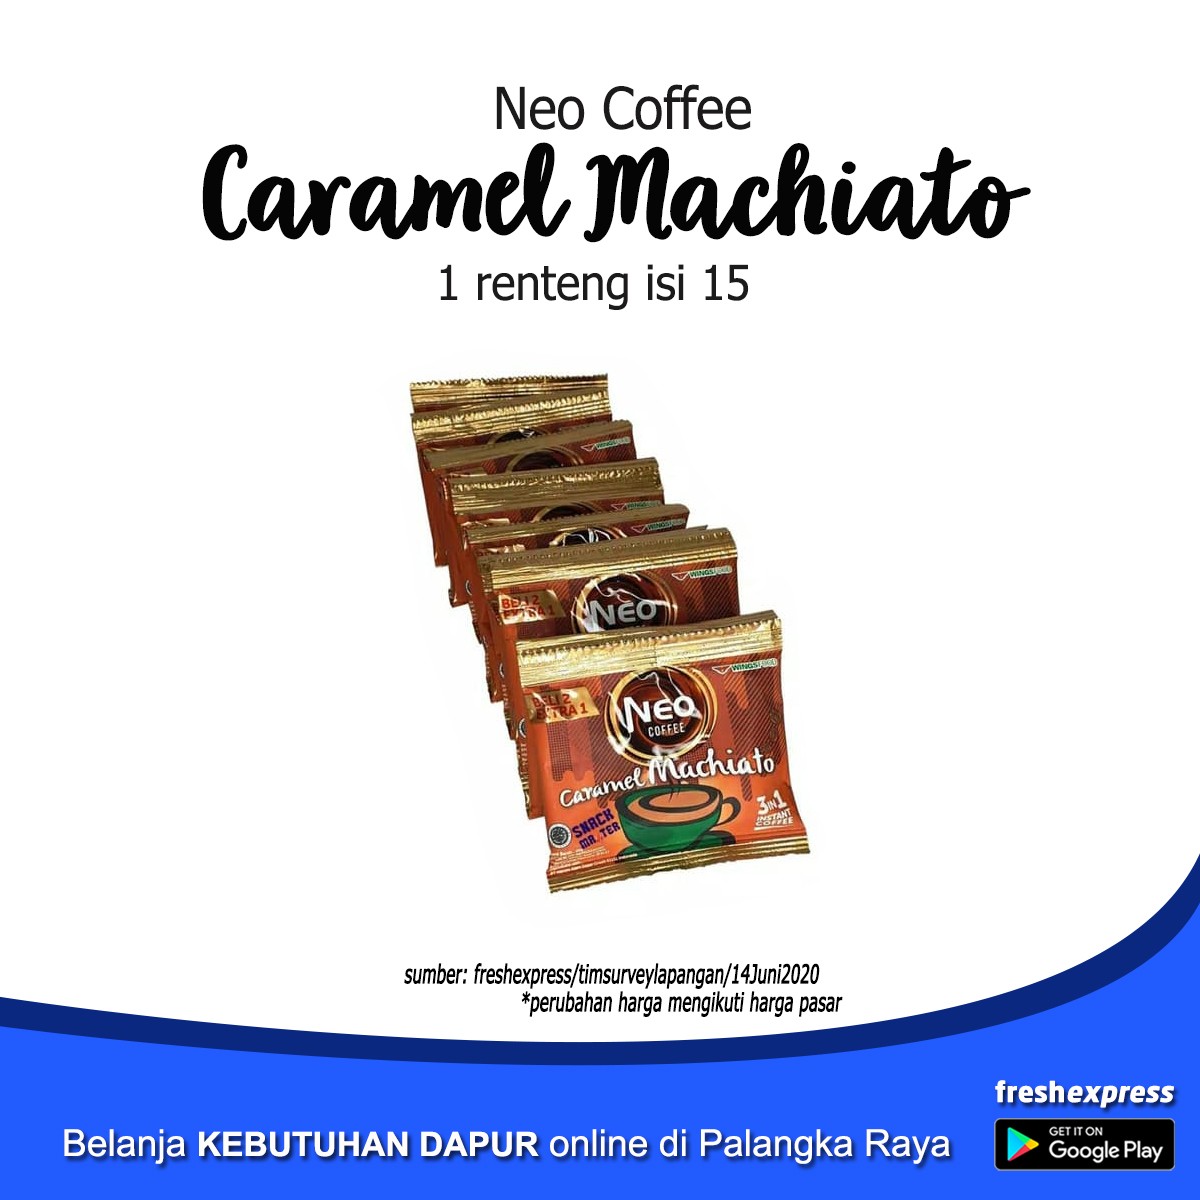 Neo Caffe Caramel Machiato